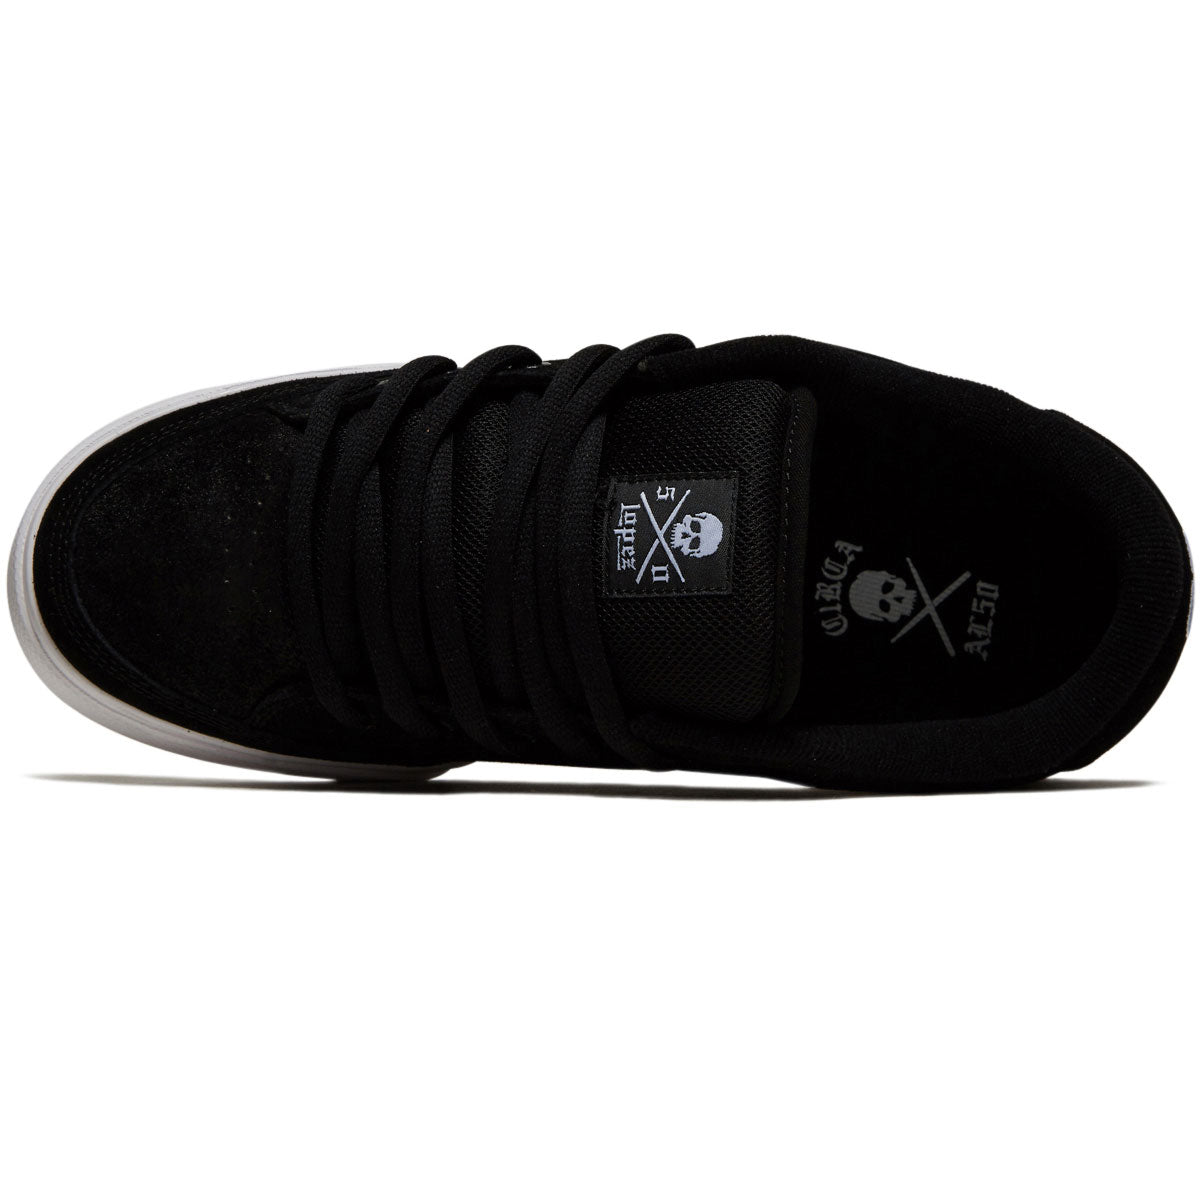 C1rca Al 50 Shoes - Worn Black/White image 3